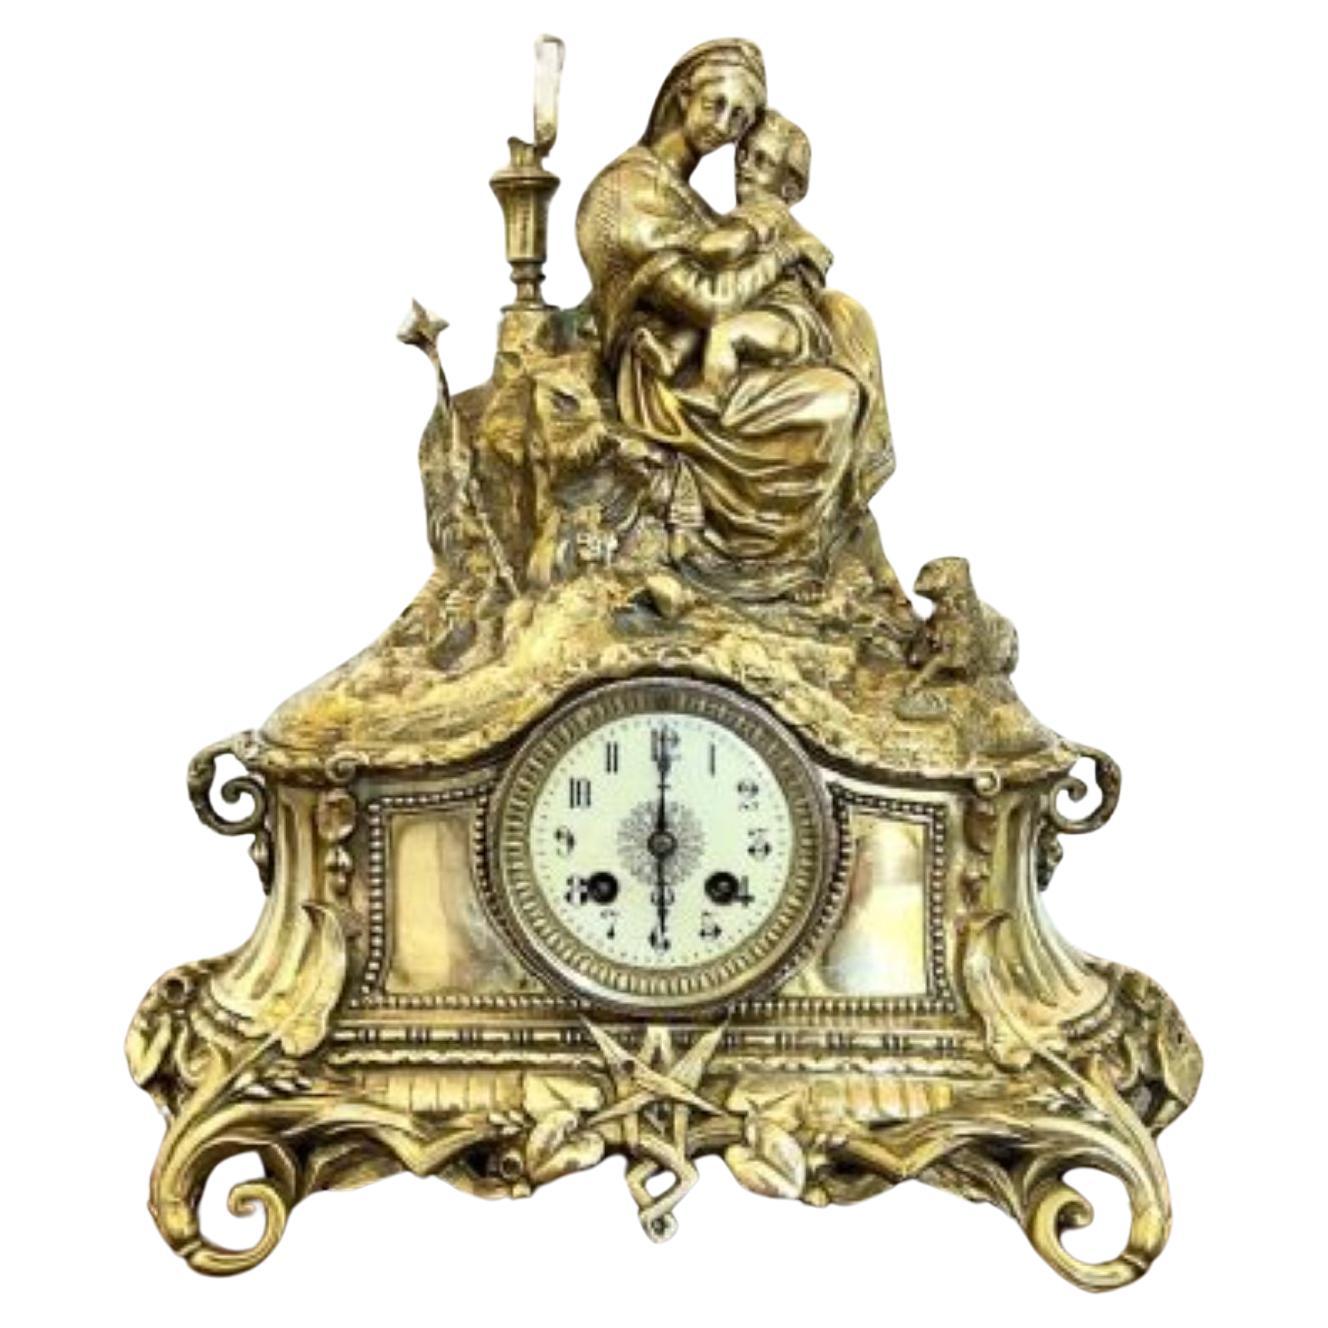 Stunning antique Victorian quality ornate brass mantle clock 